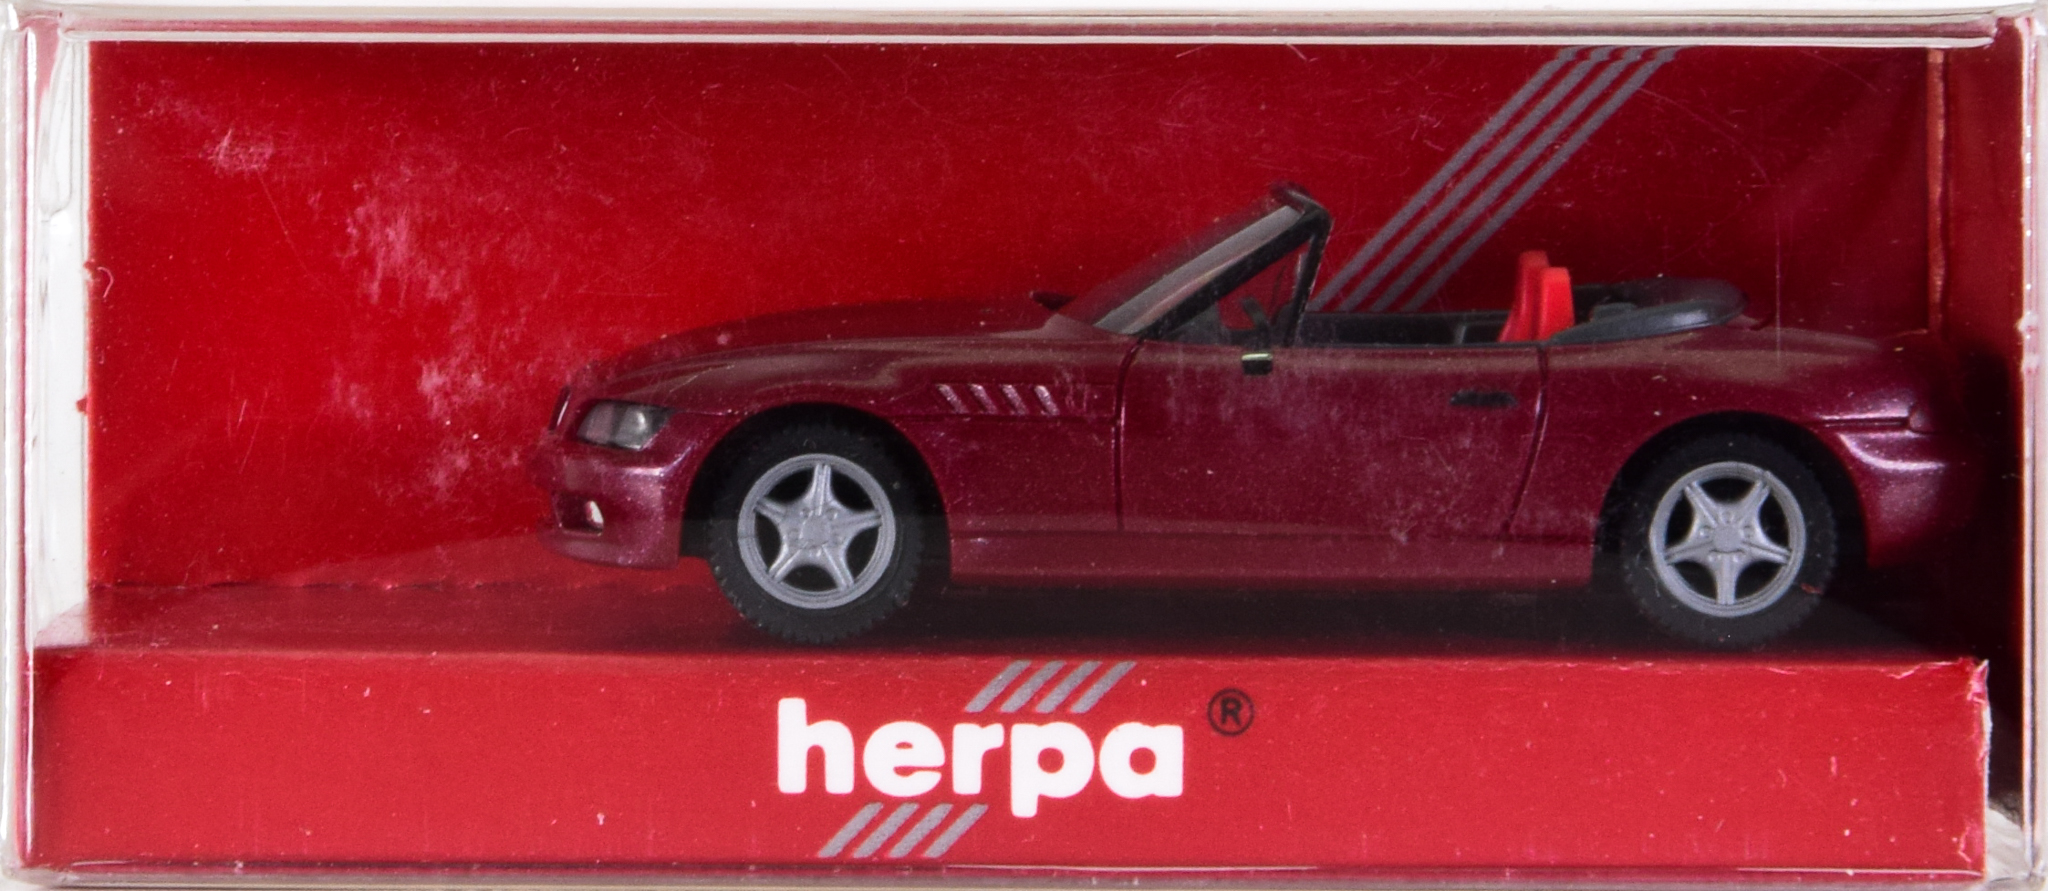 Herpa 031936 (1:87) – BMW Z3 rot-metallic